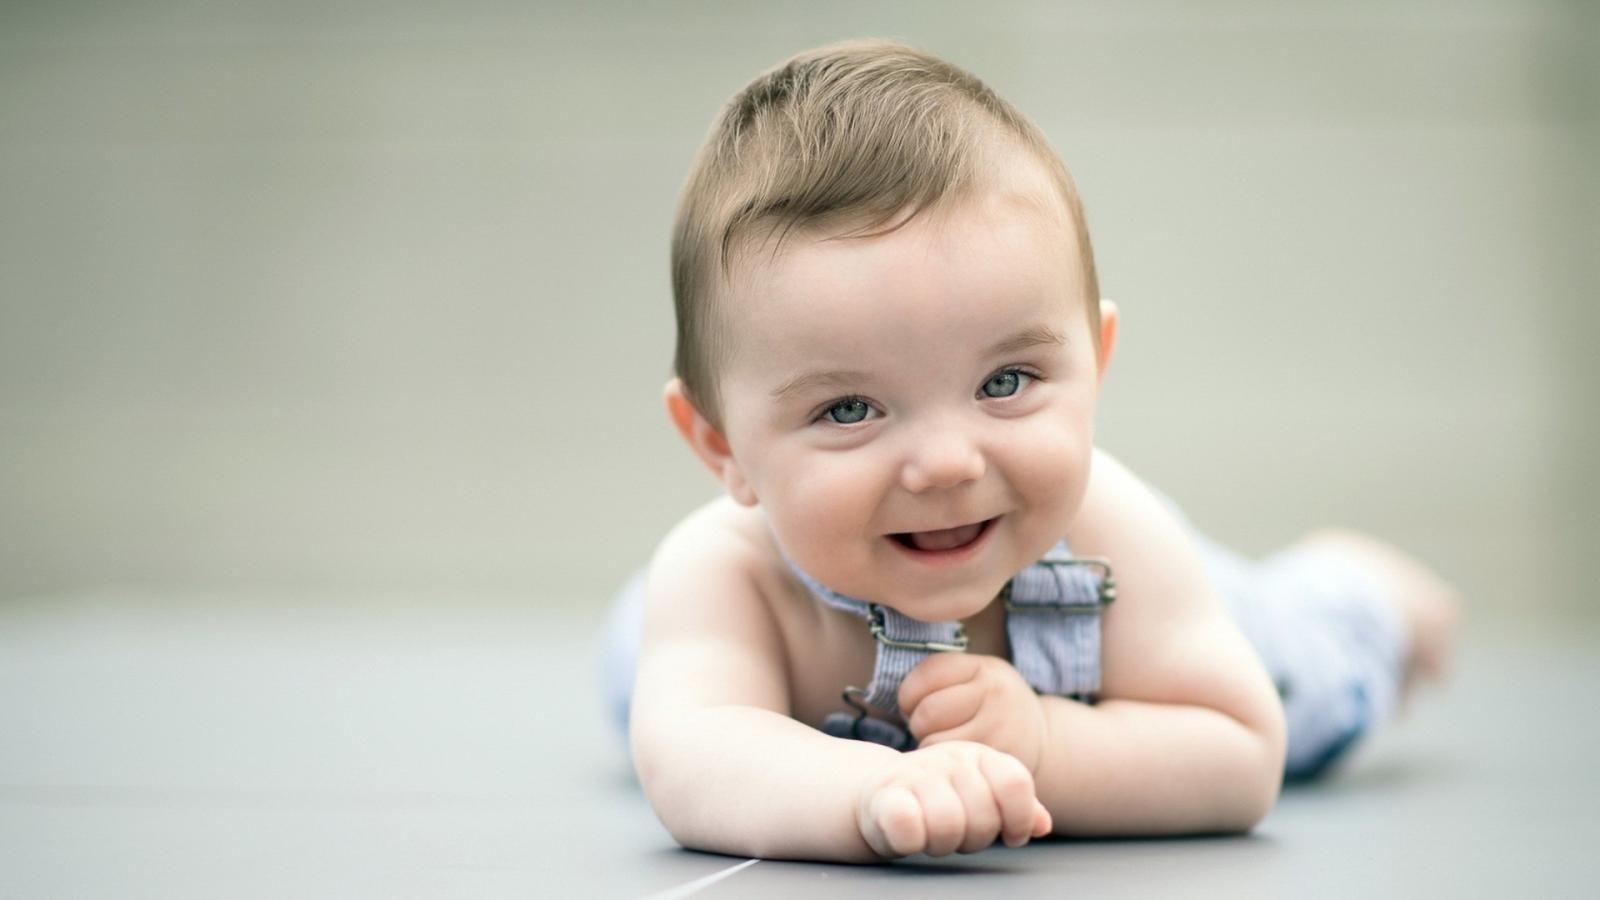 Beautiful Baby Smiling Photo Free Desktop Background Widescreen